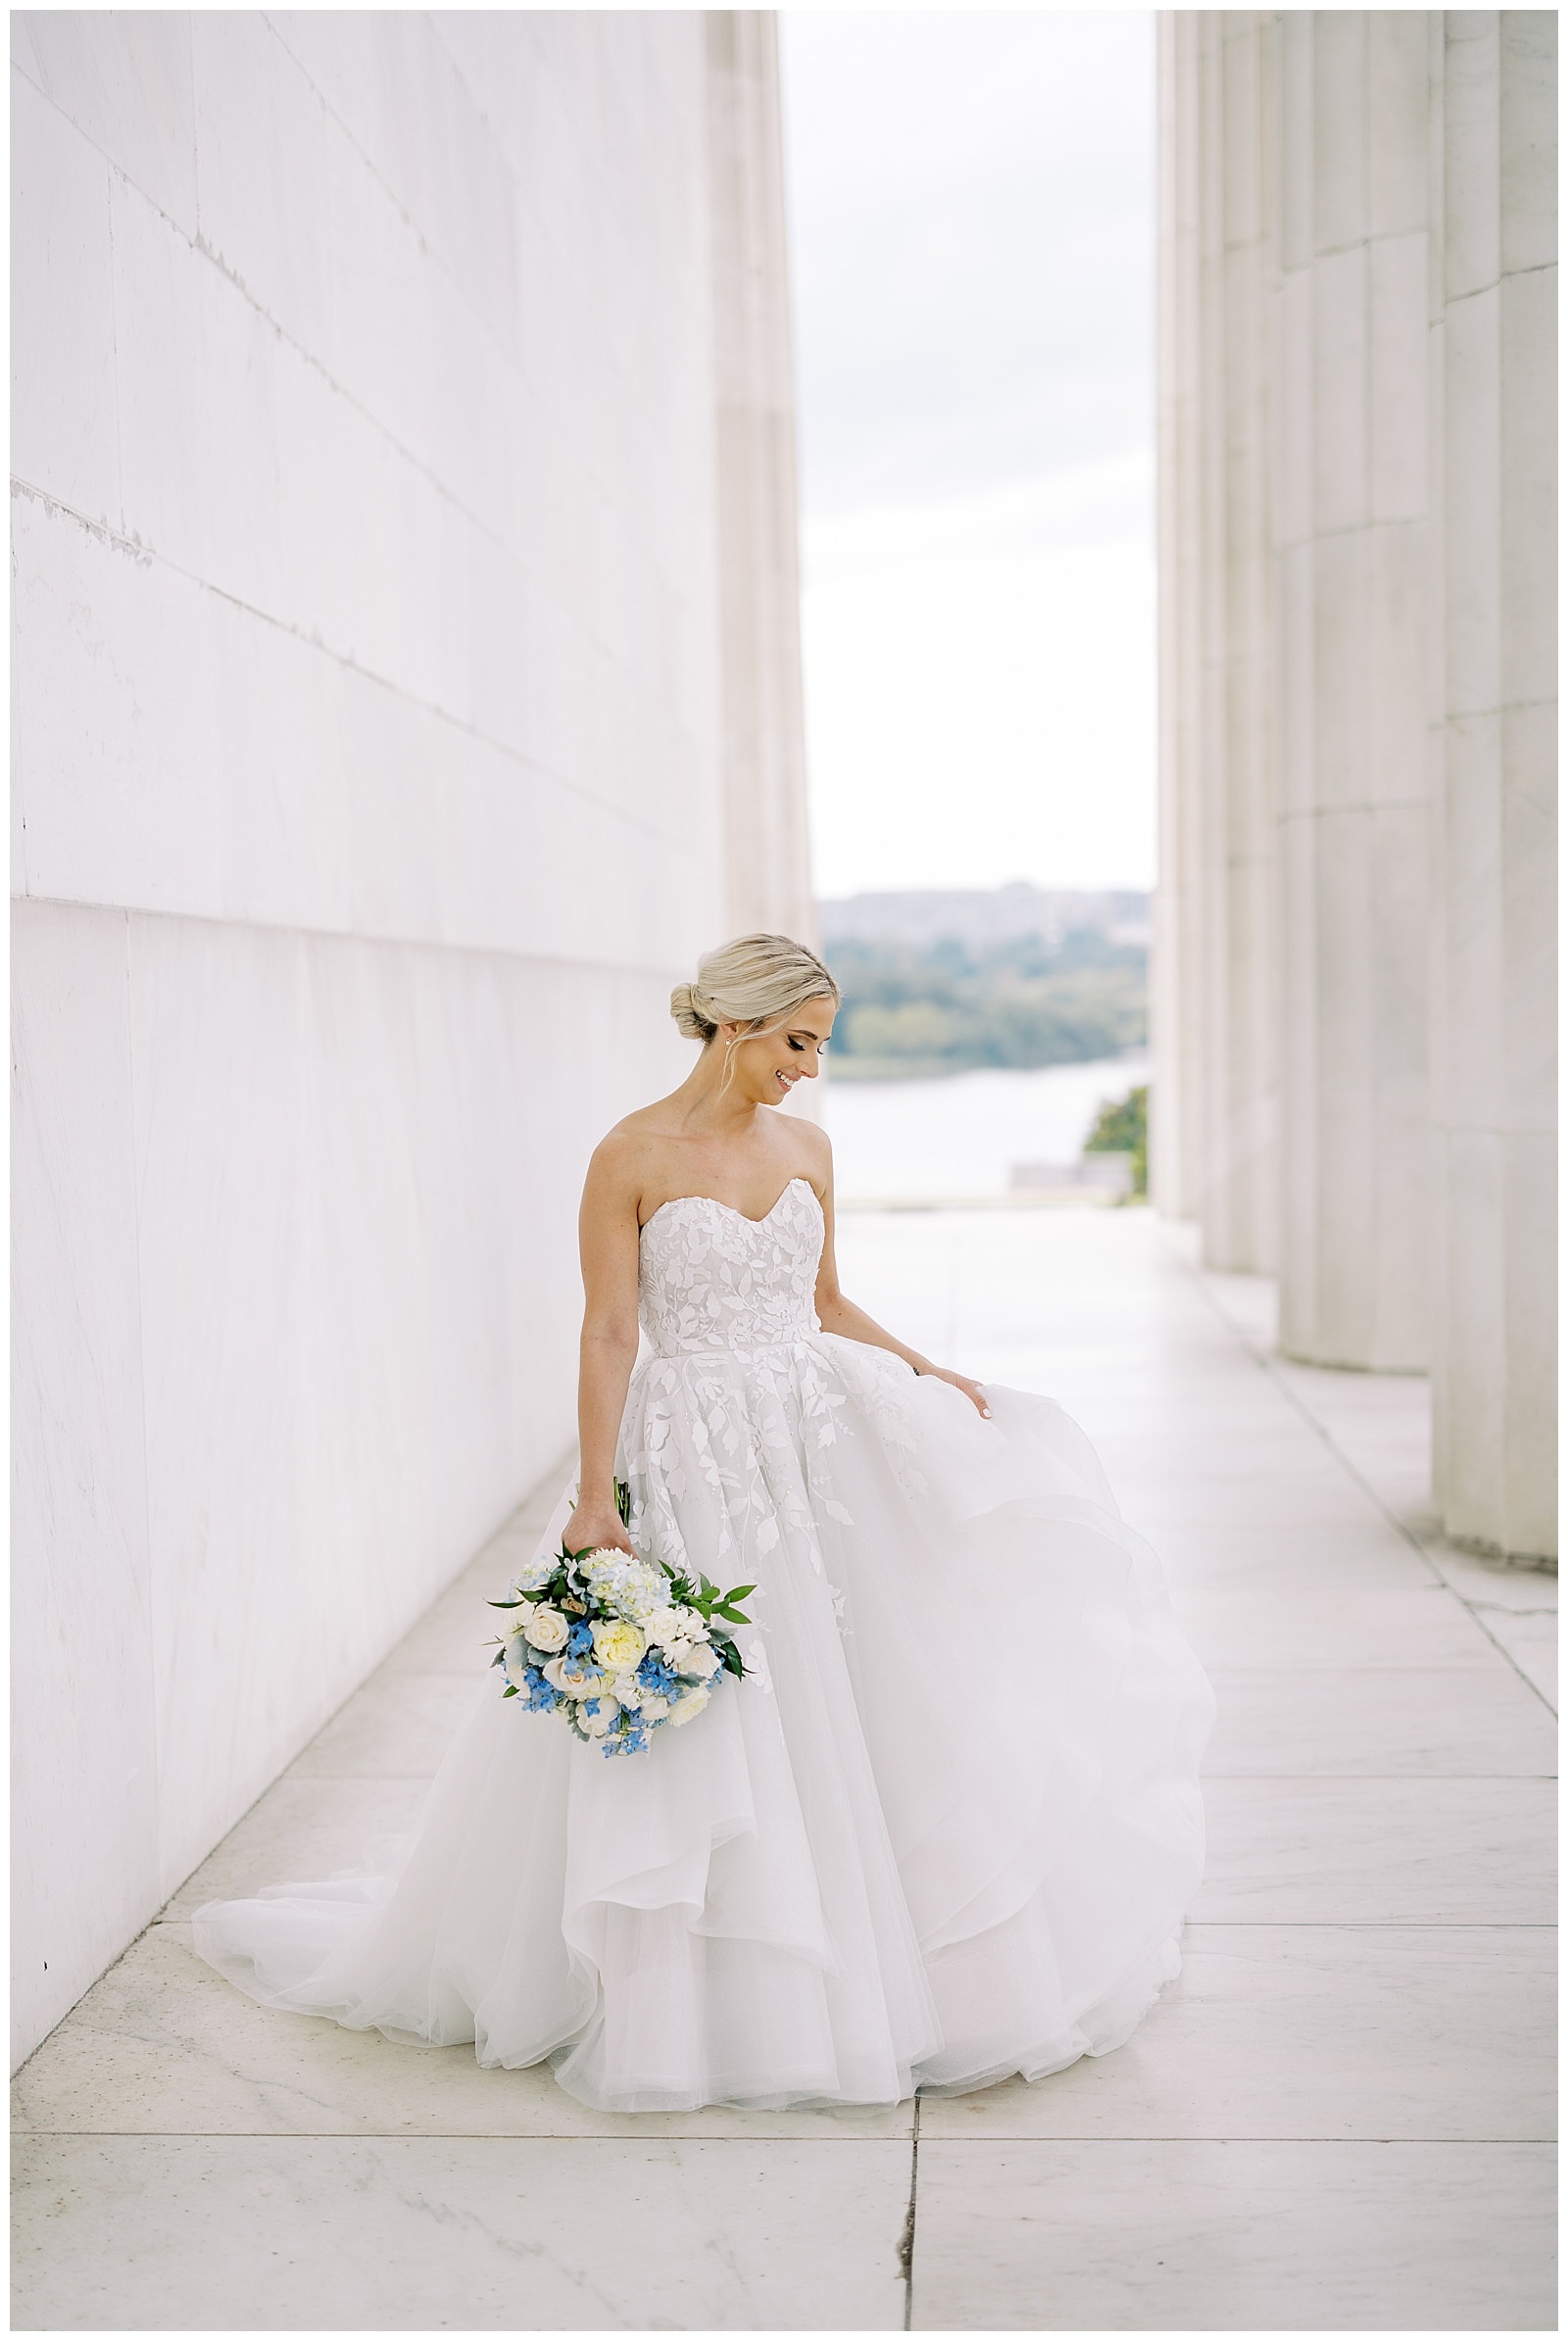 Danielle-Defayette-Photography-potomac-view-terrace-wedding-dc_0006.jpg